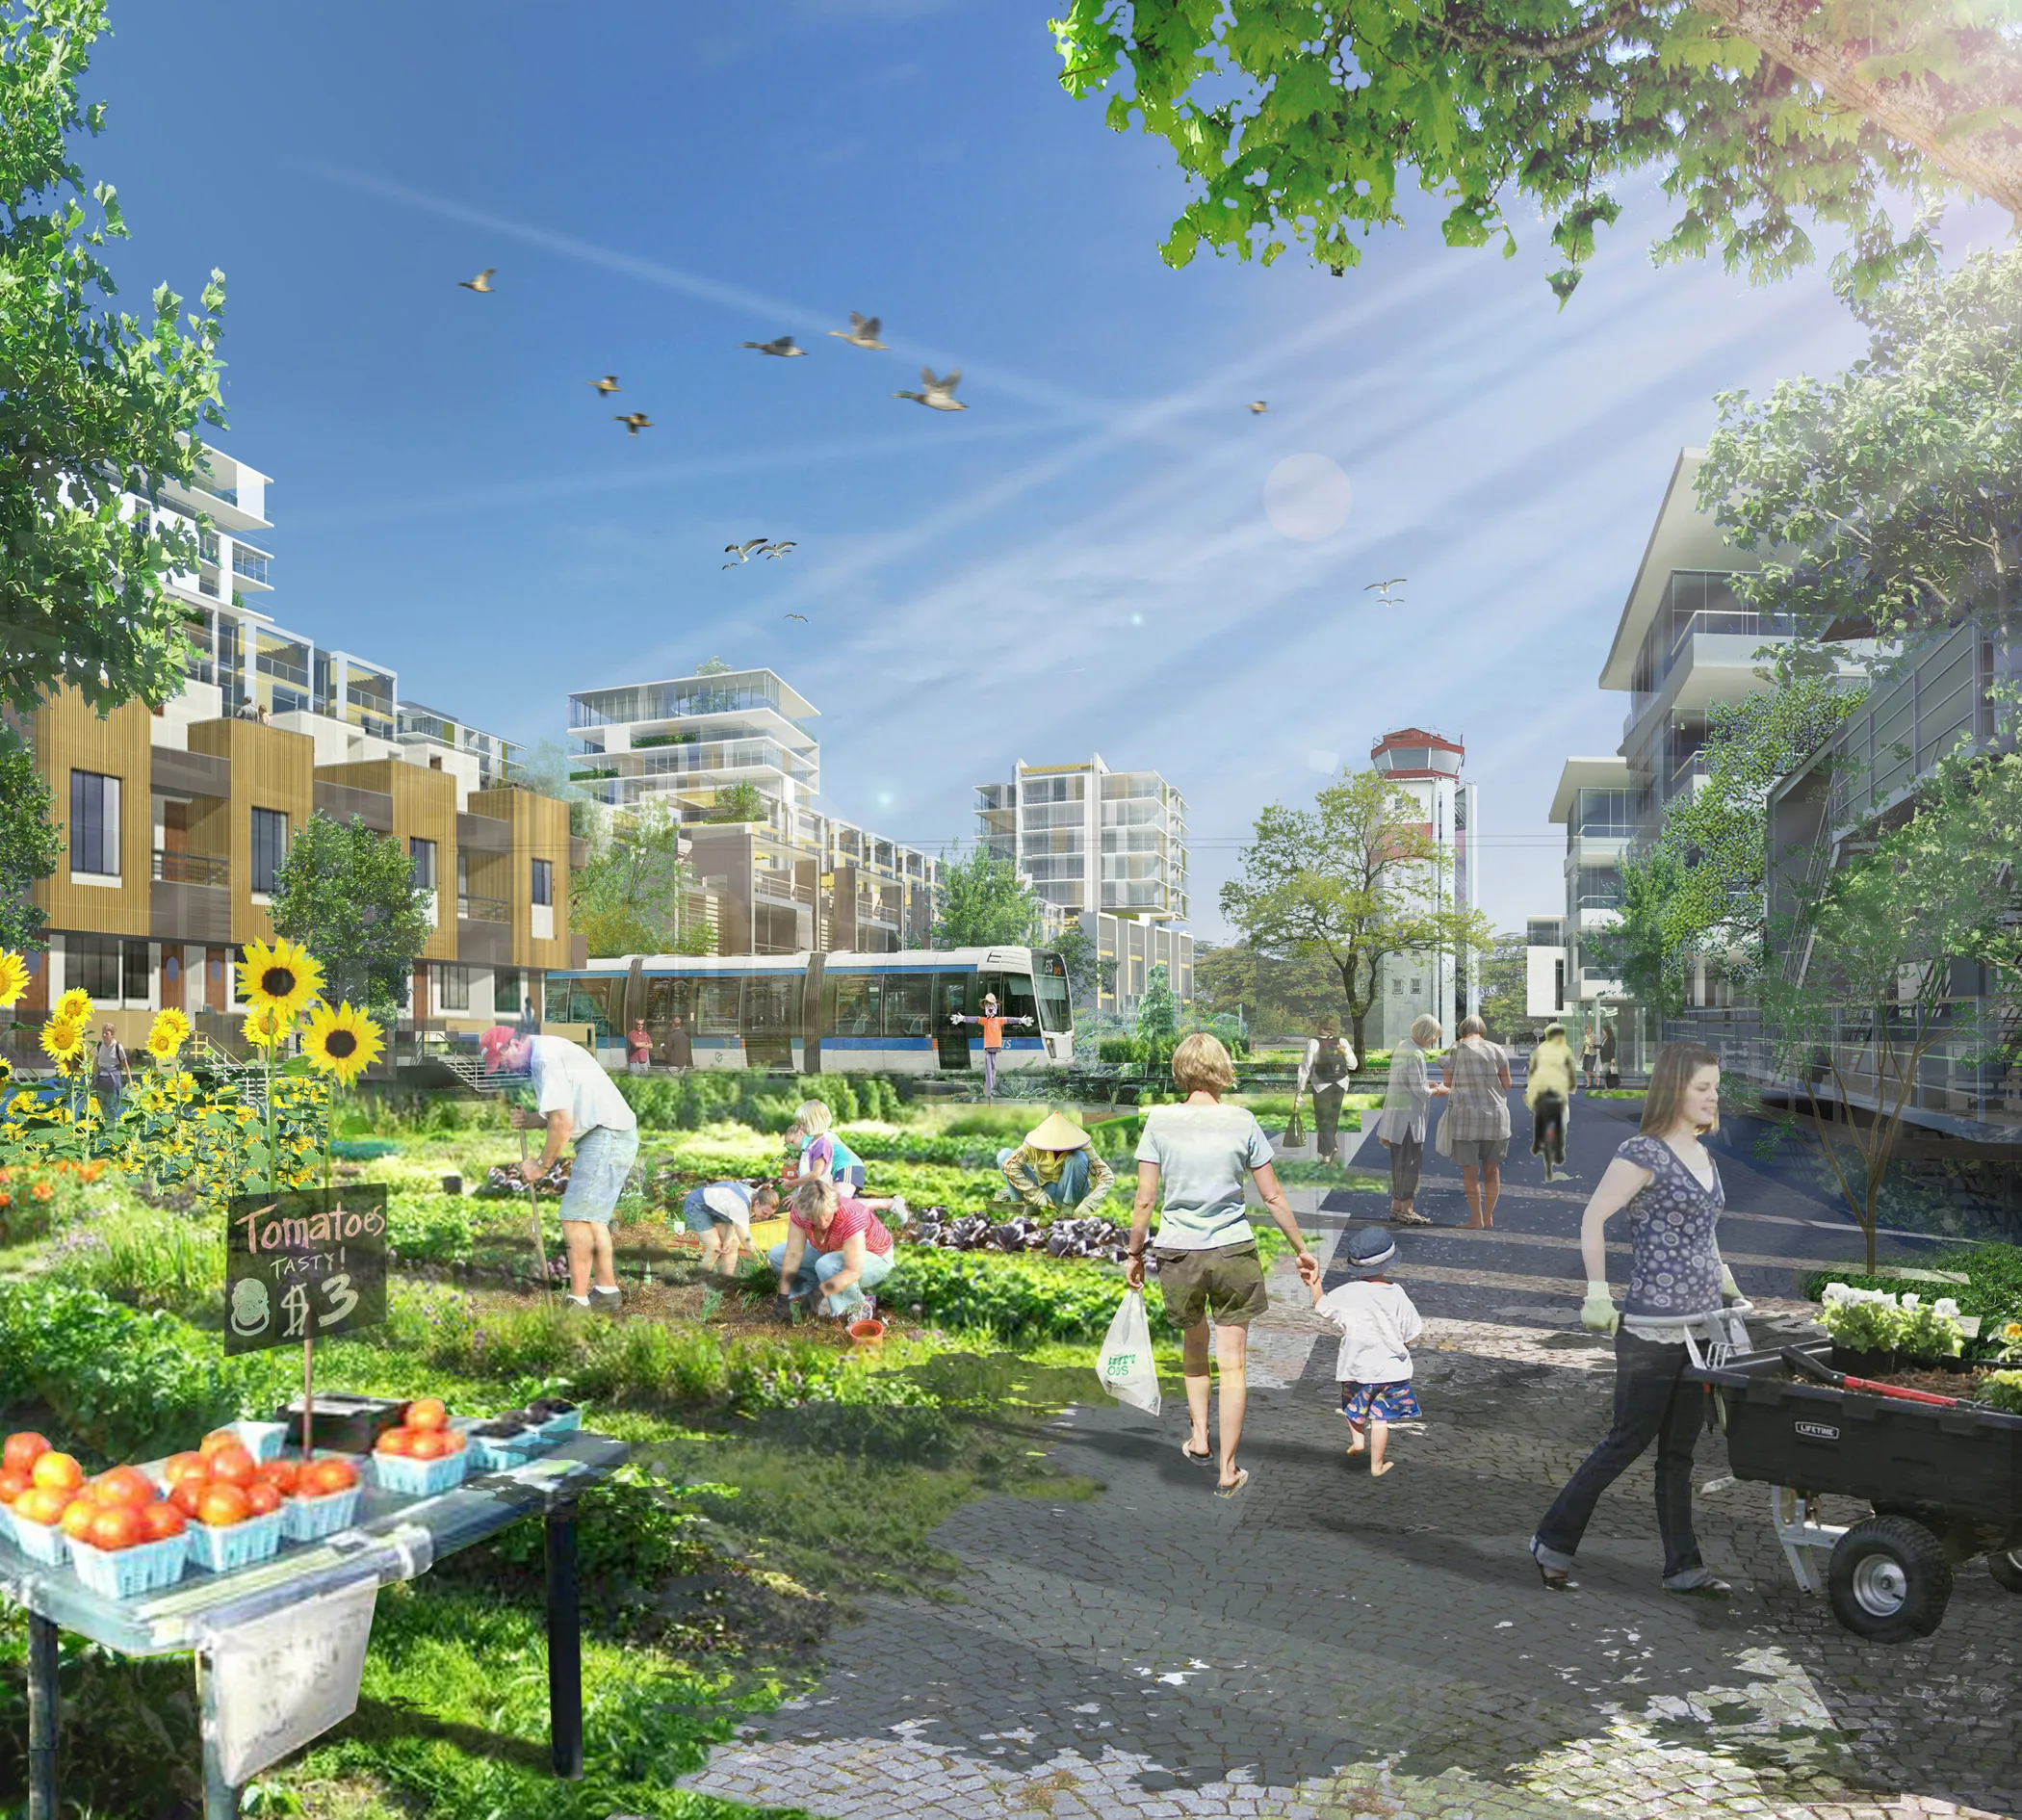 Blatchford: Building the neighbourhood of the future